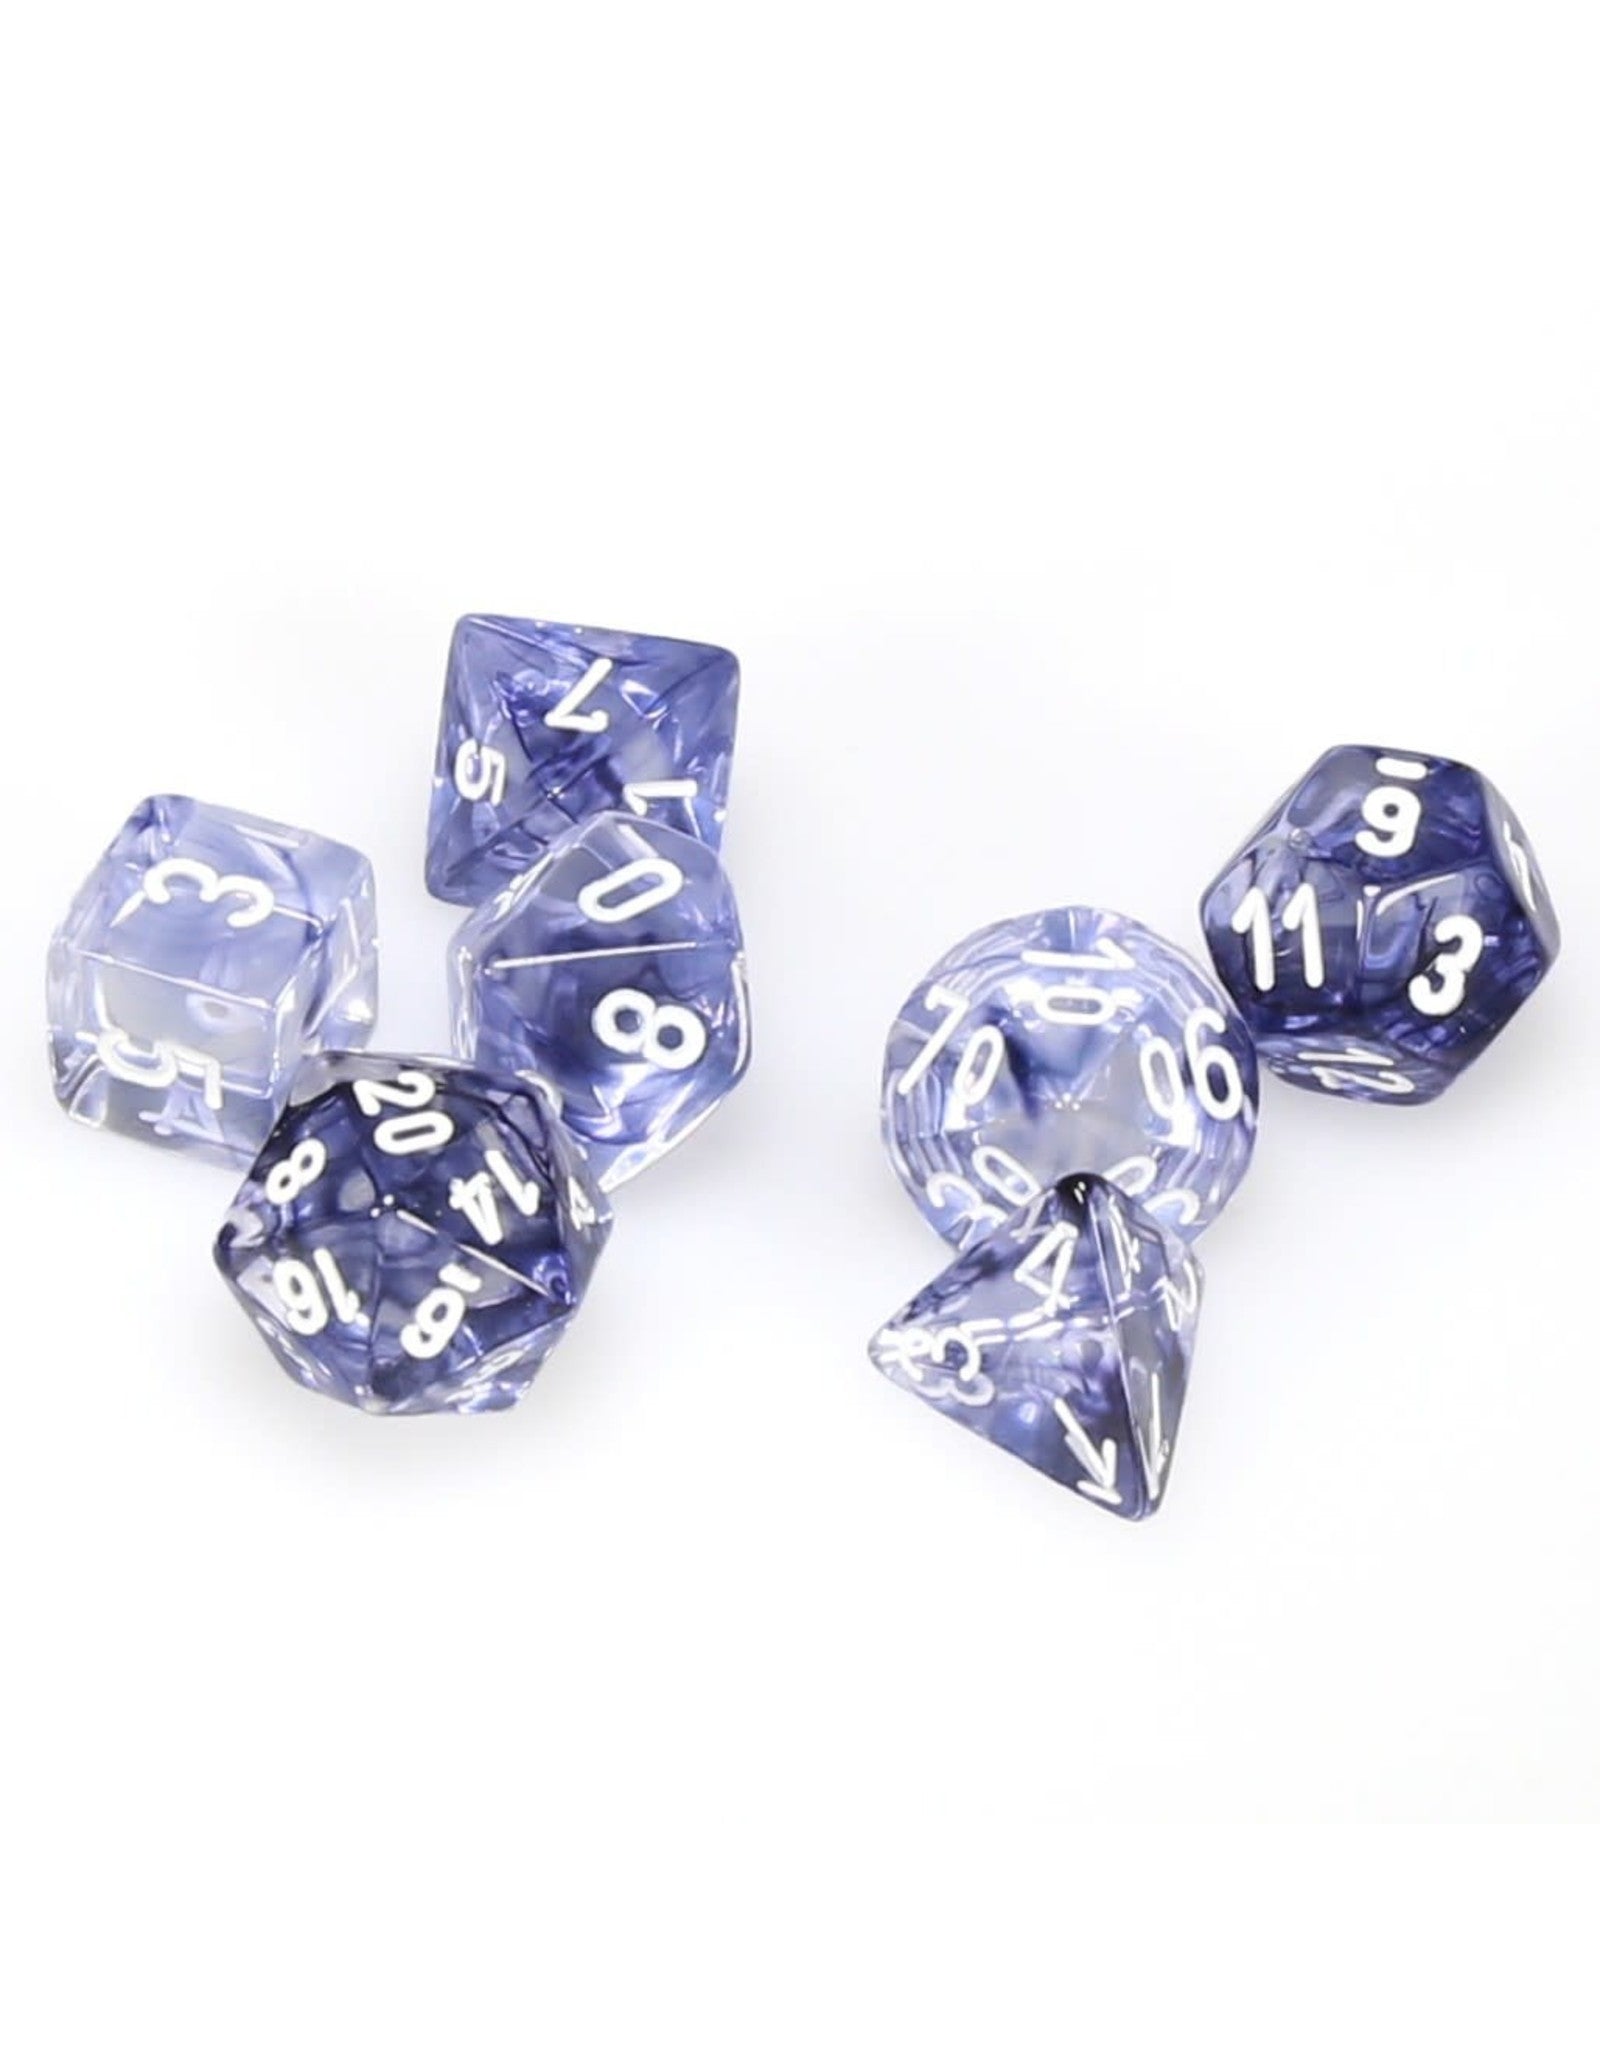 Chessex Nebula Polyhedral 7-Die Set